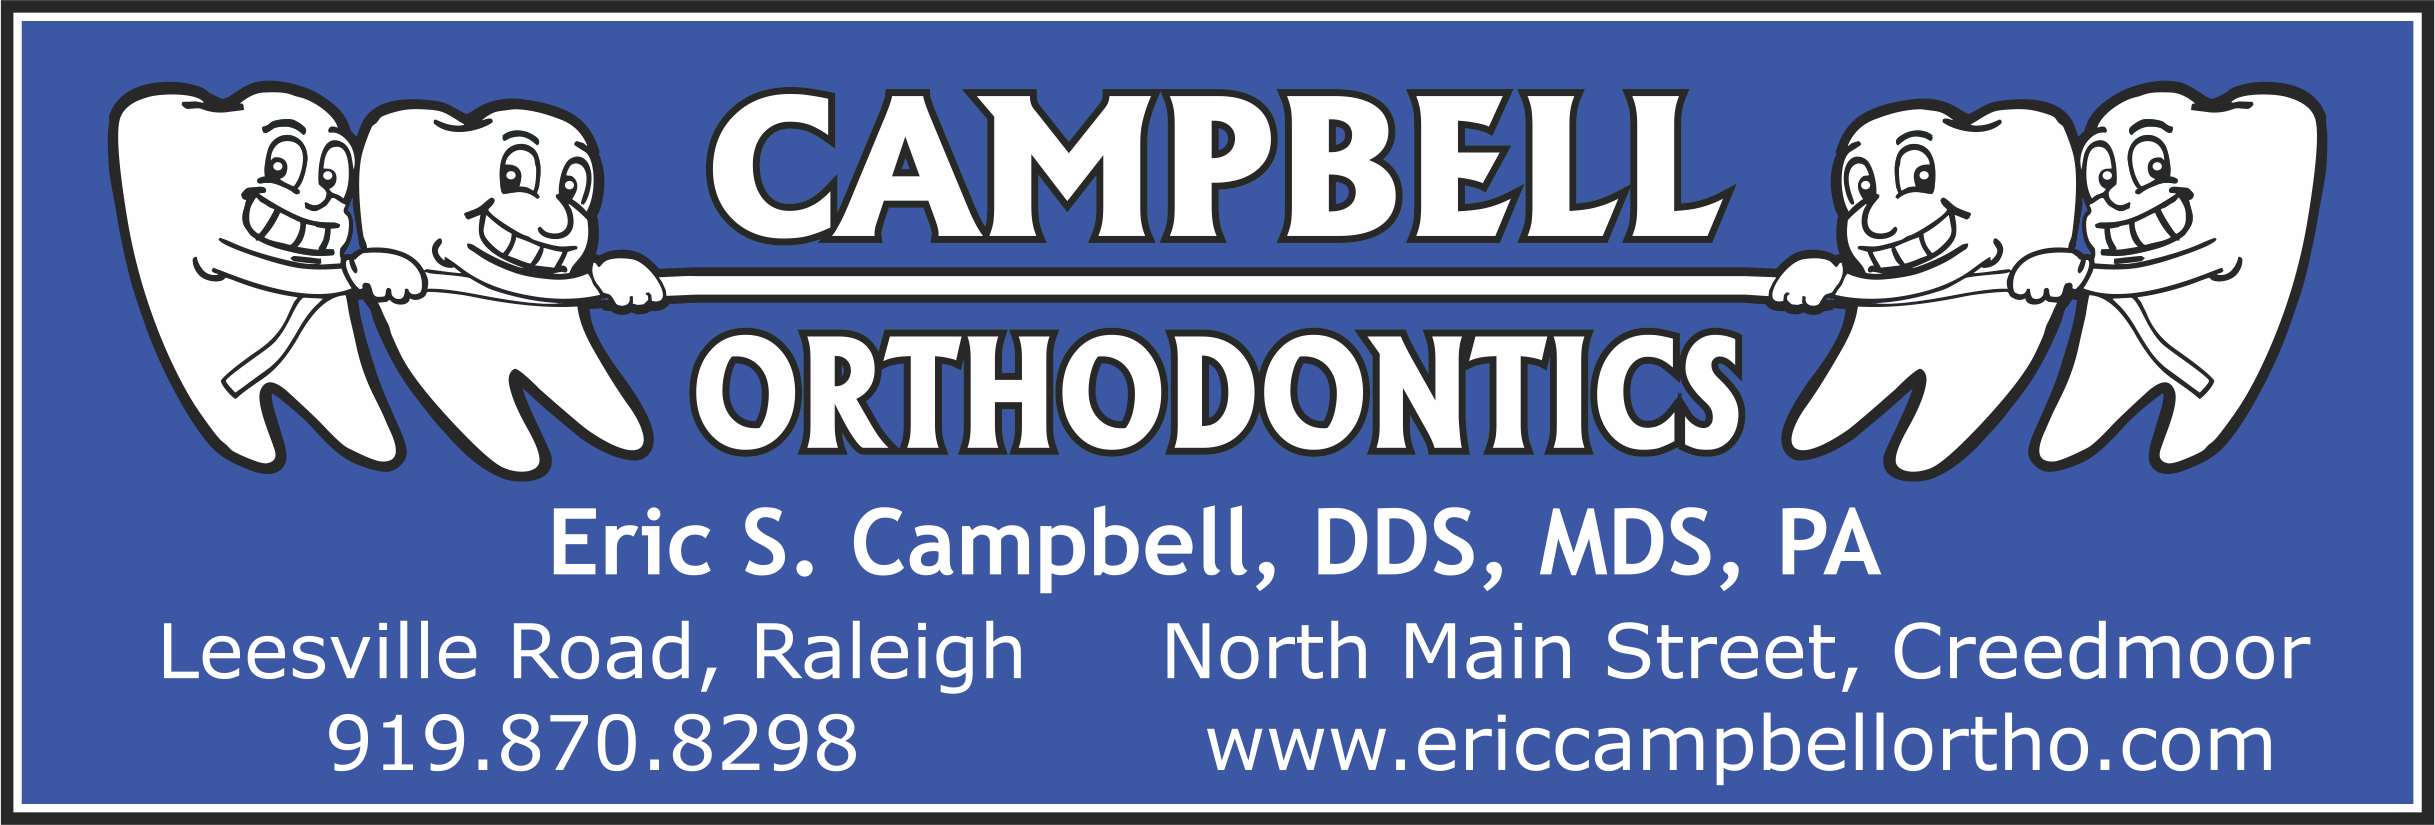 Sponsor Campbell Orthodontics